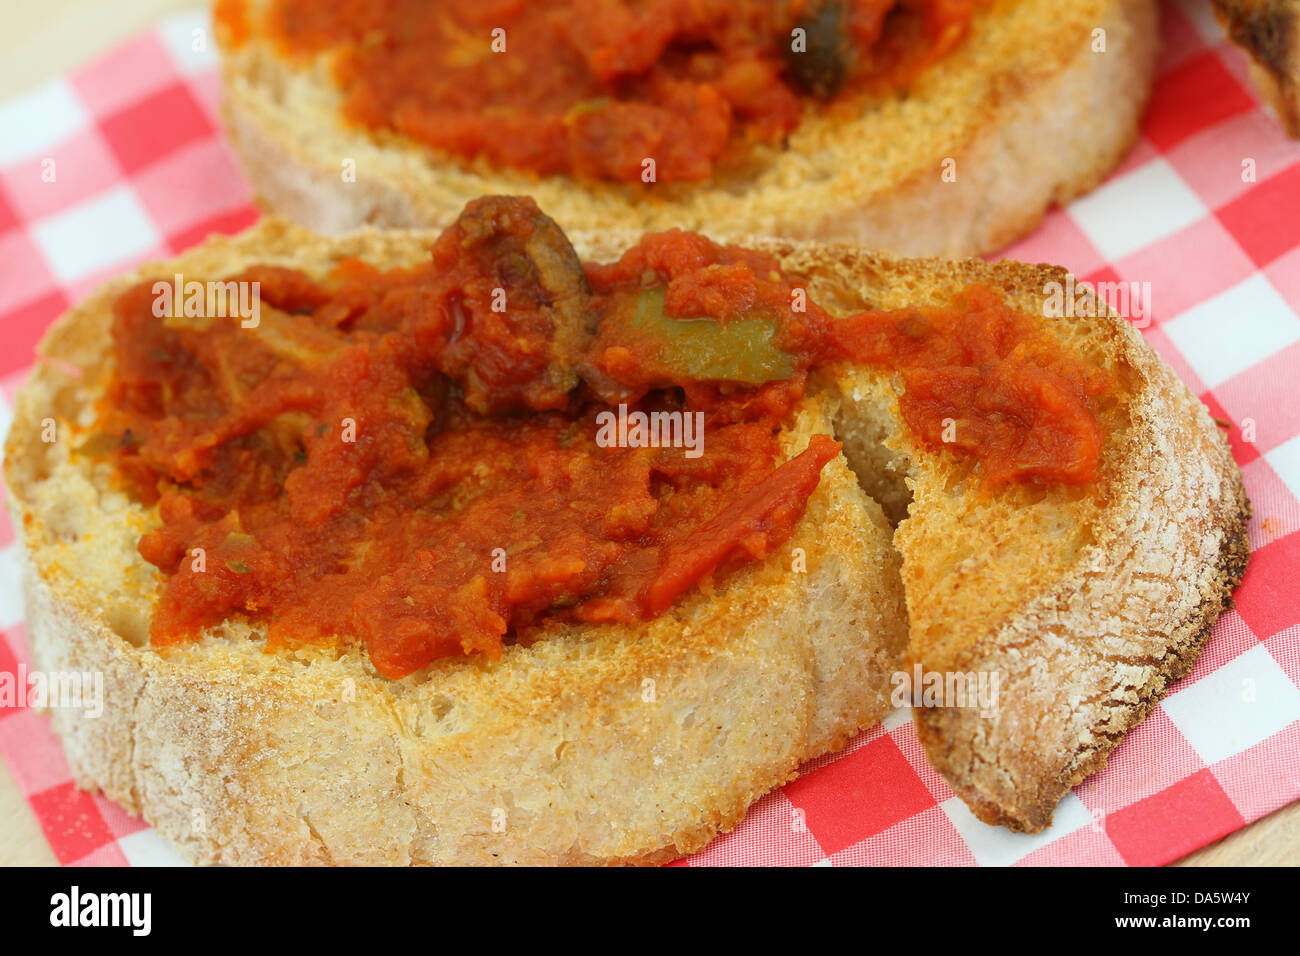 Bruschetta with tomato paste and olives on checkered napkin Stock Photo